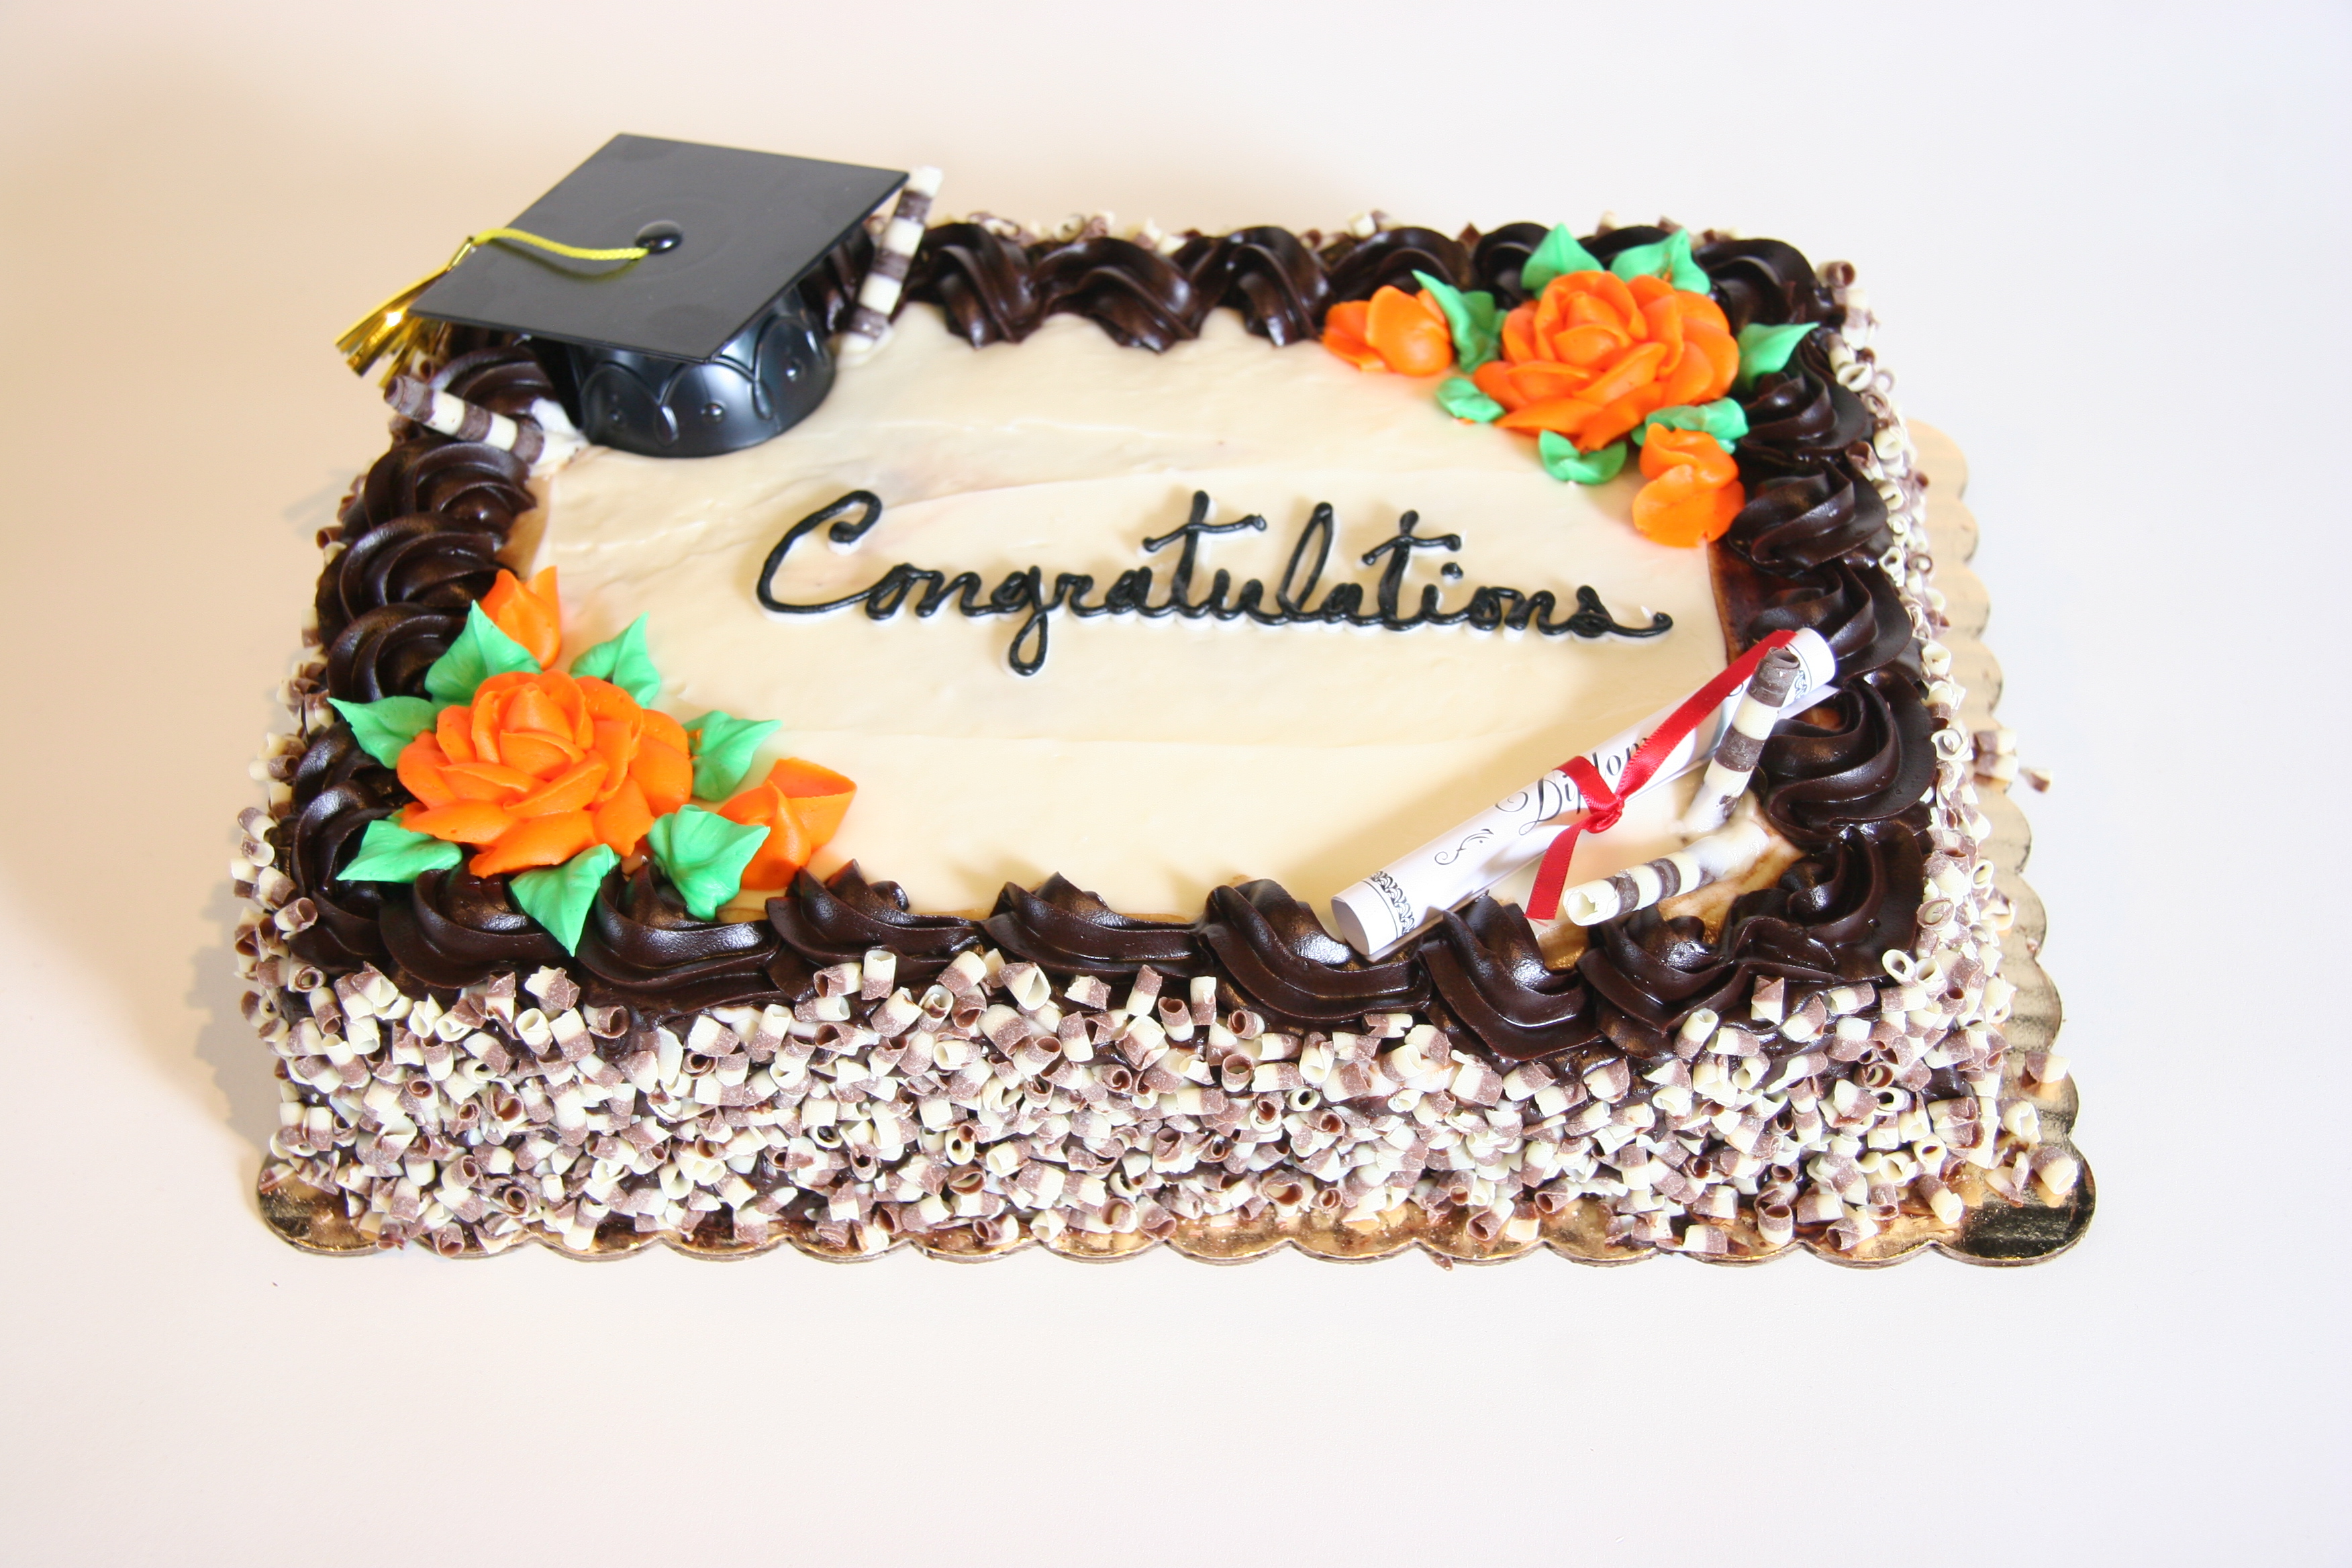 Graduation cake Recipe by Ambreen Anayat - Cookpad